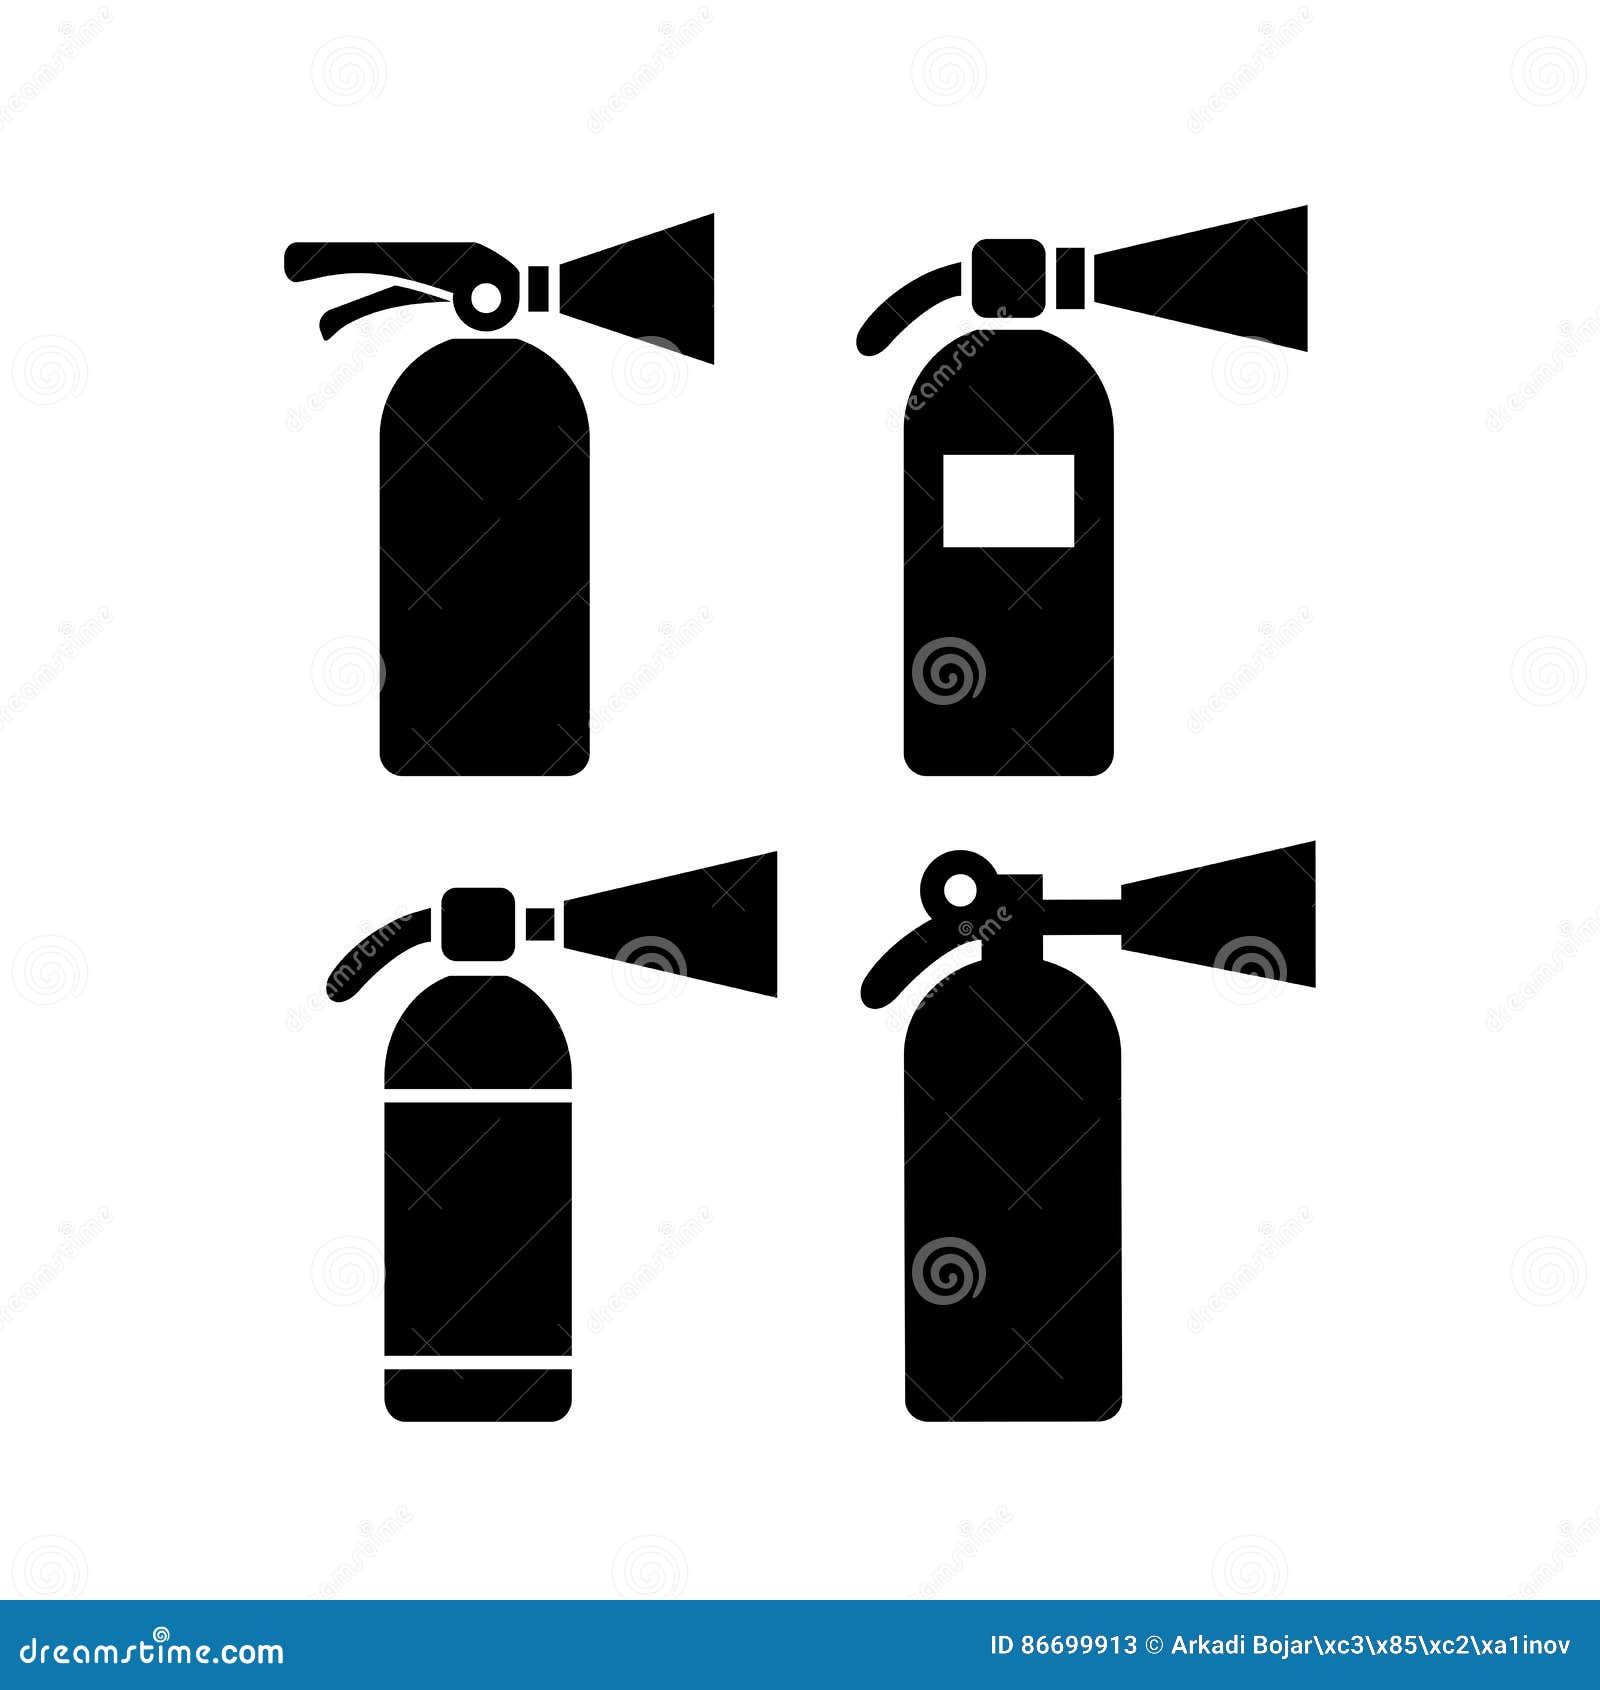 fire extinguisher  icon